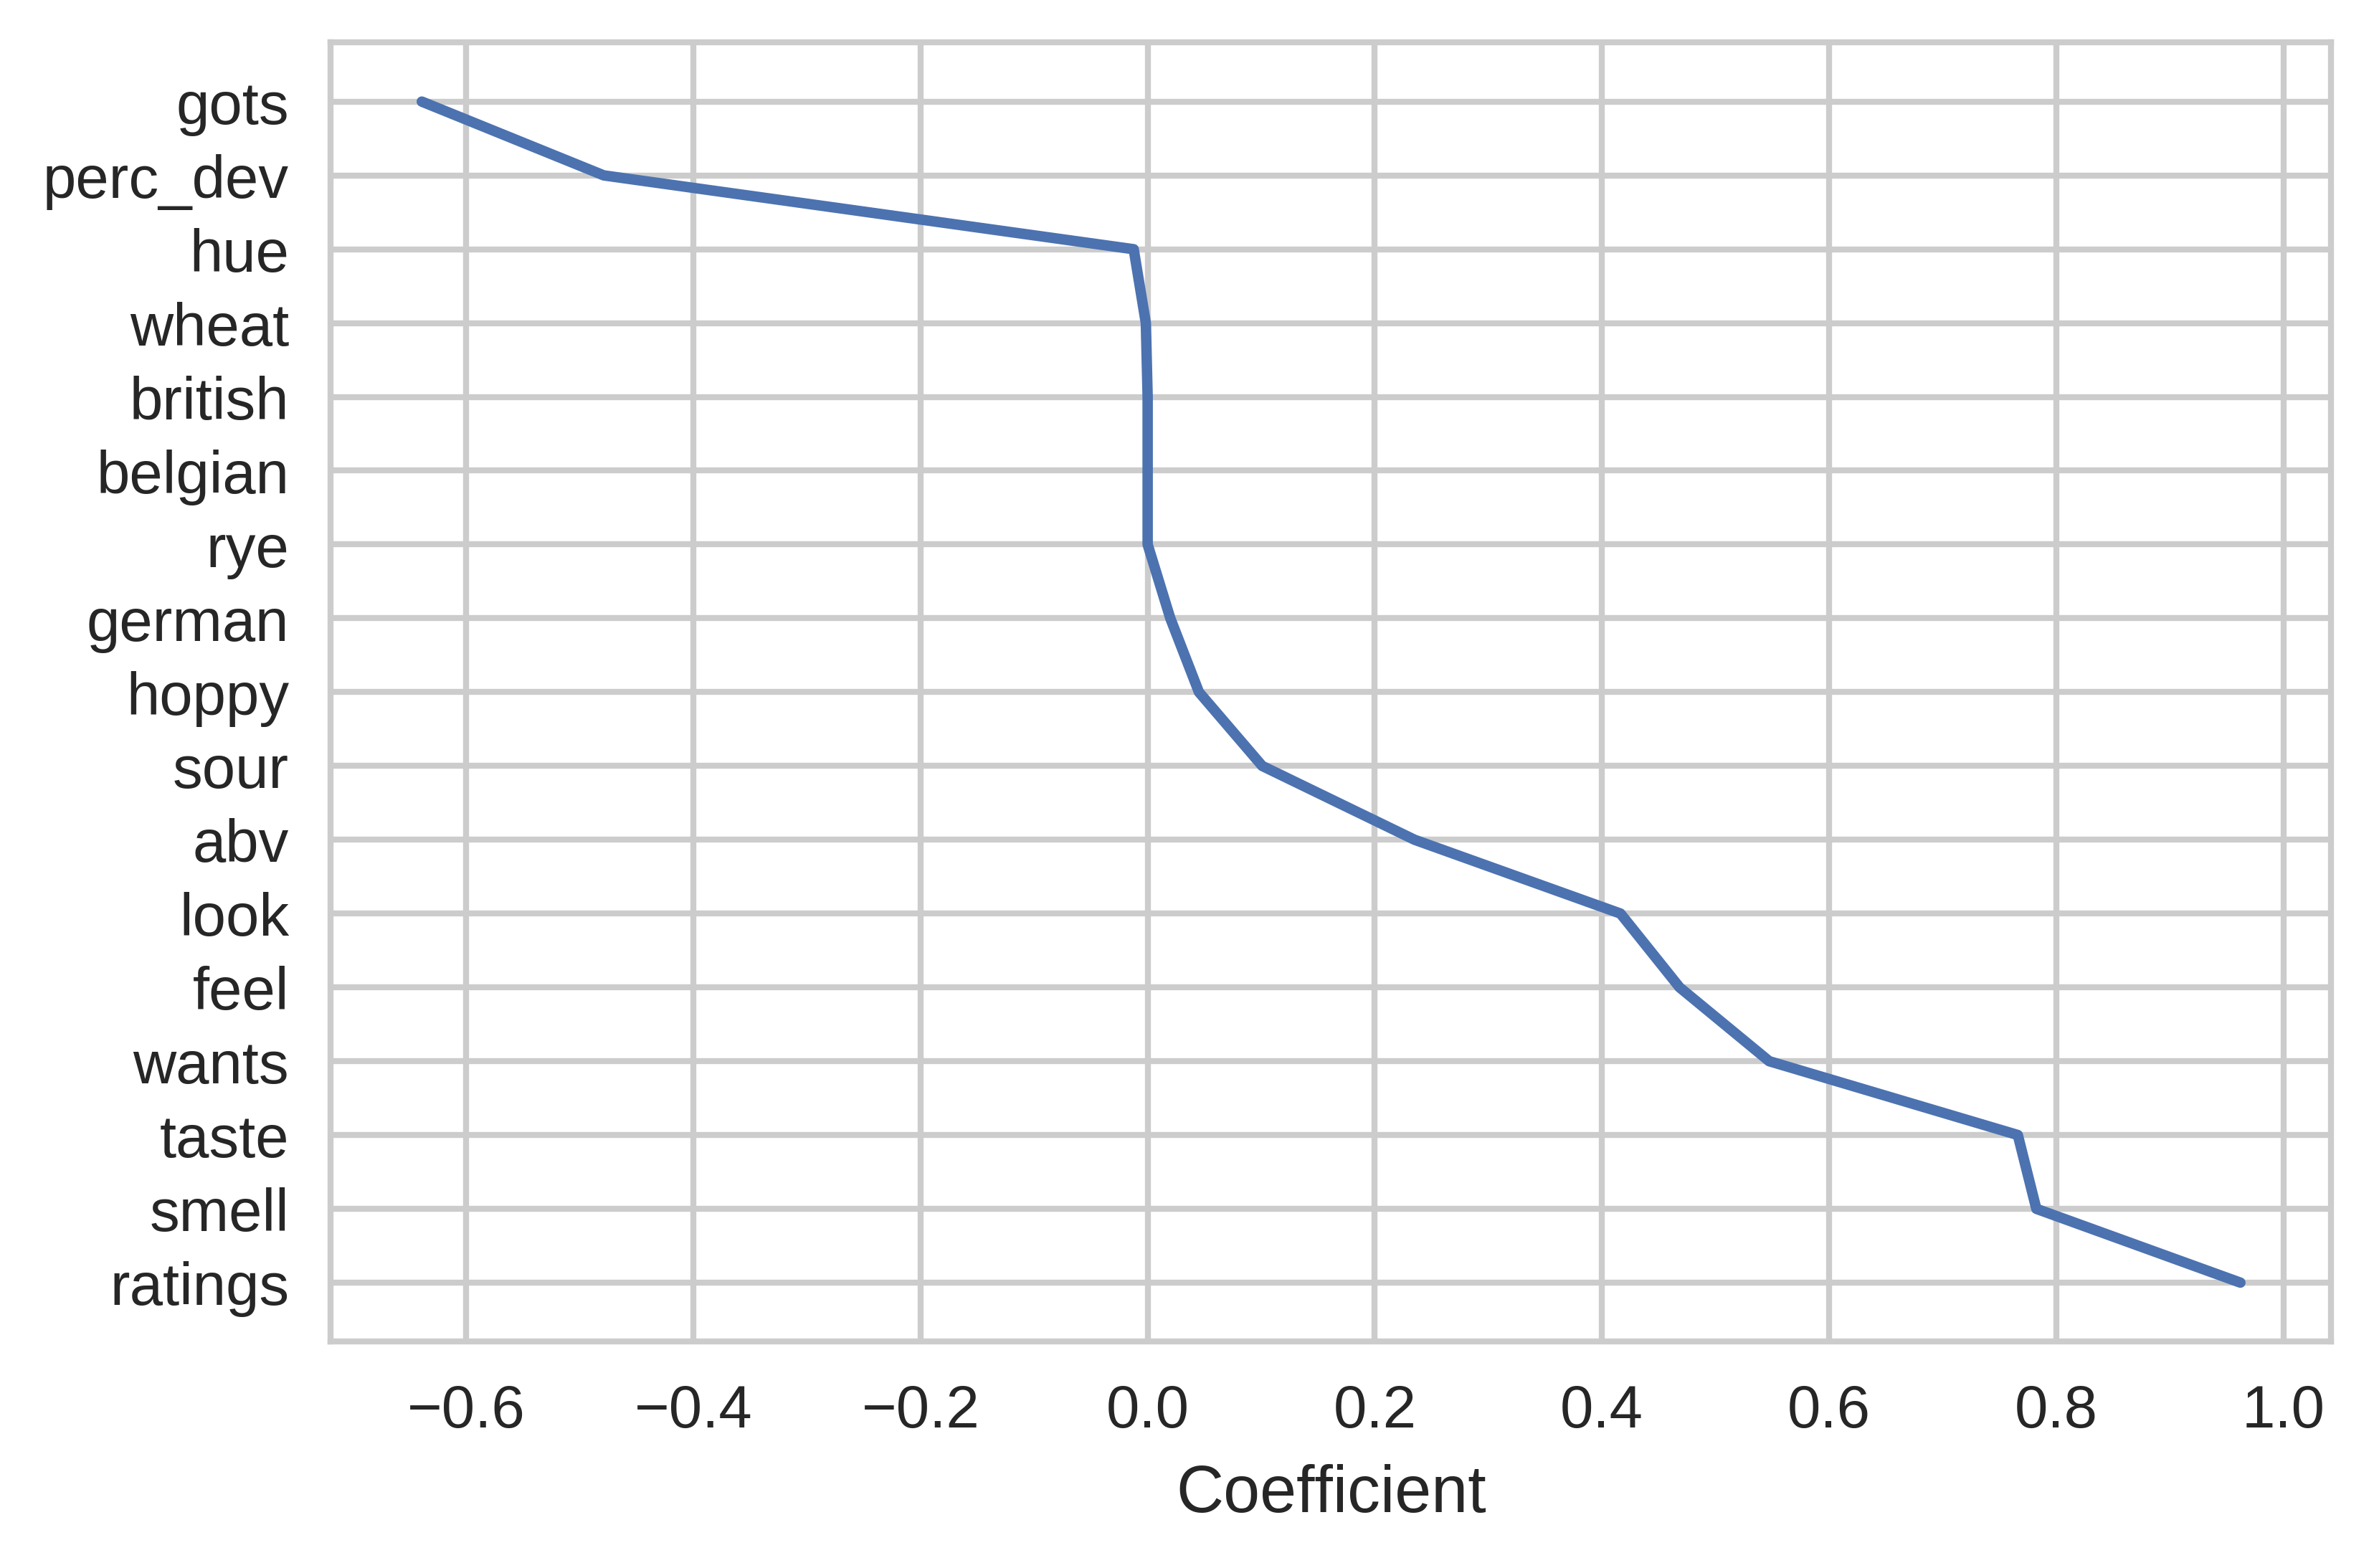 Regression coefficients